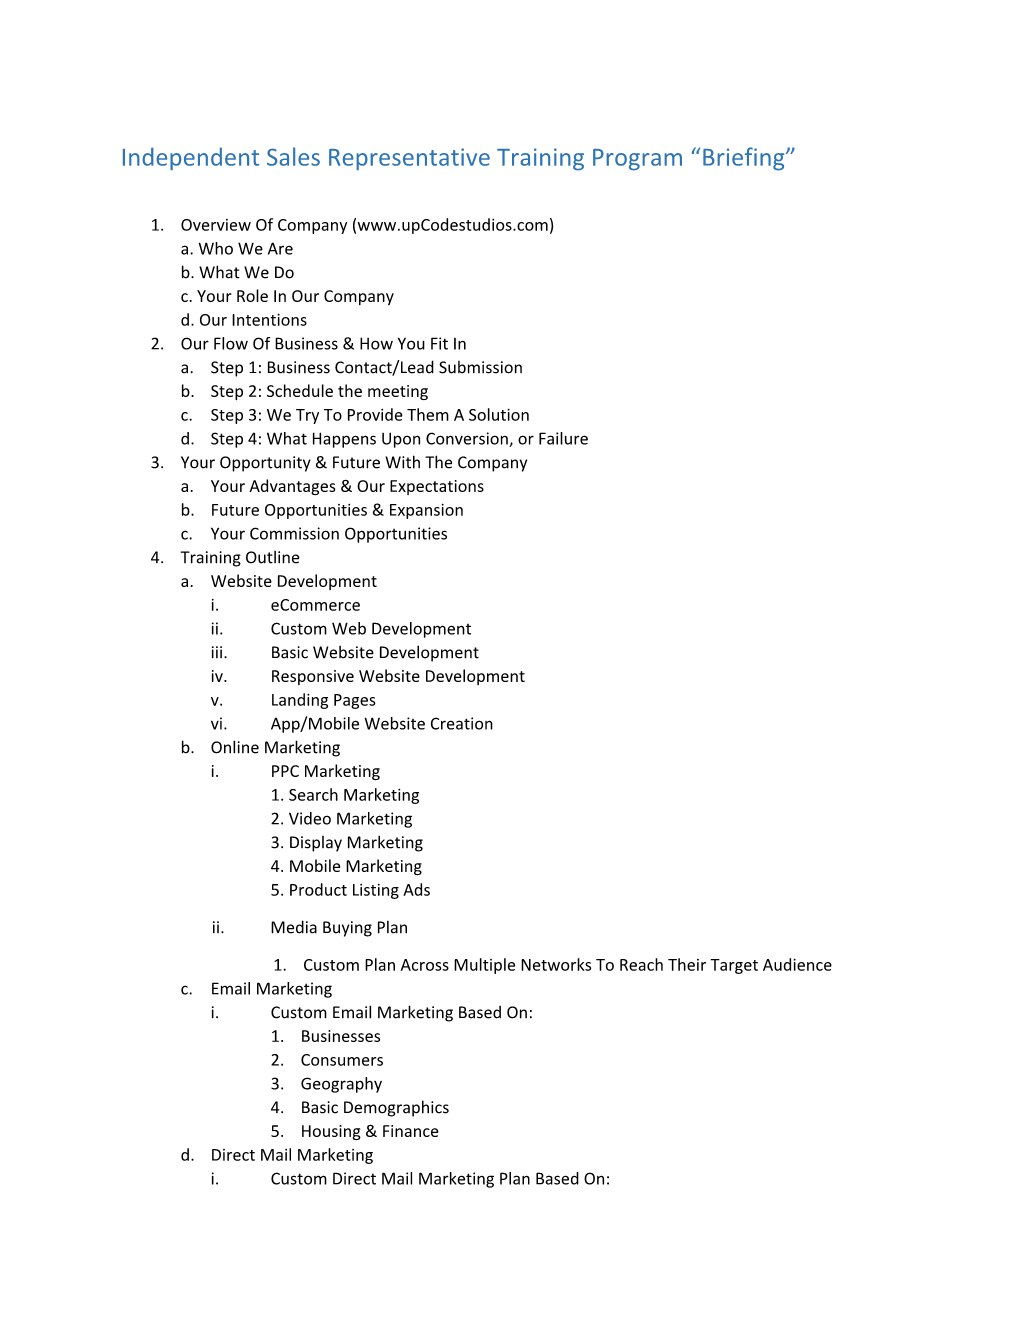 Independent Sales Representative Training Program “Briefing”